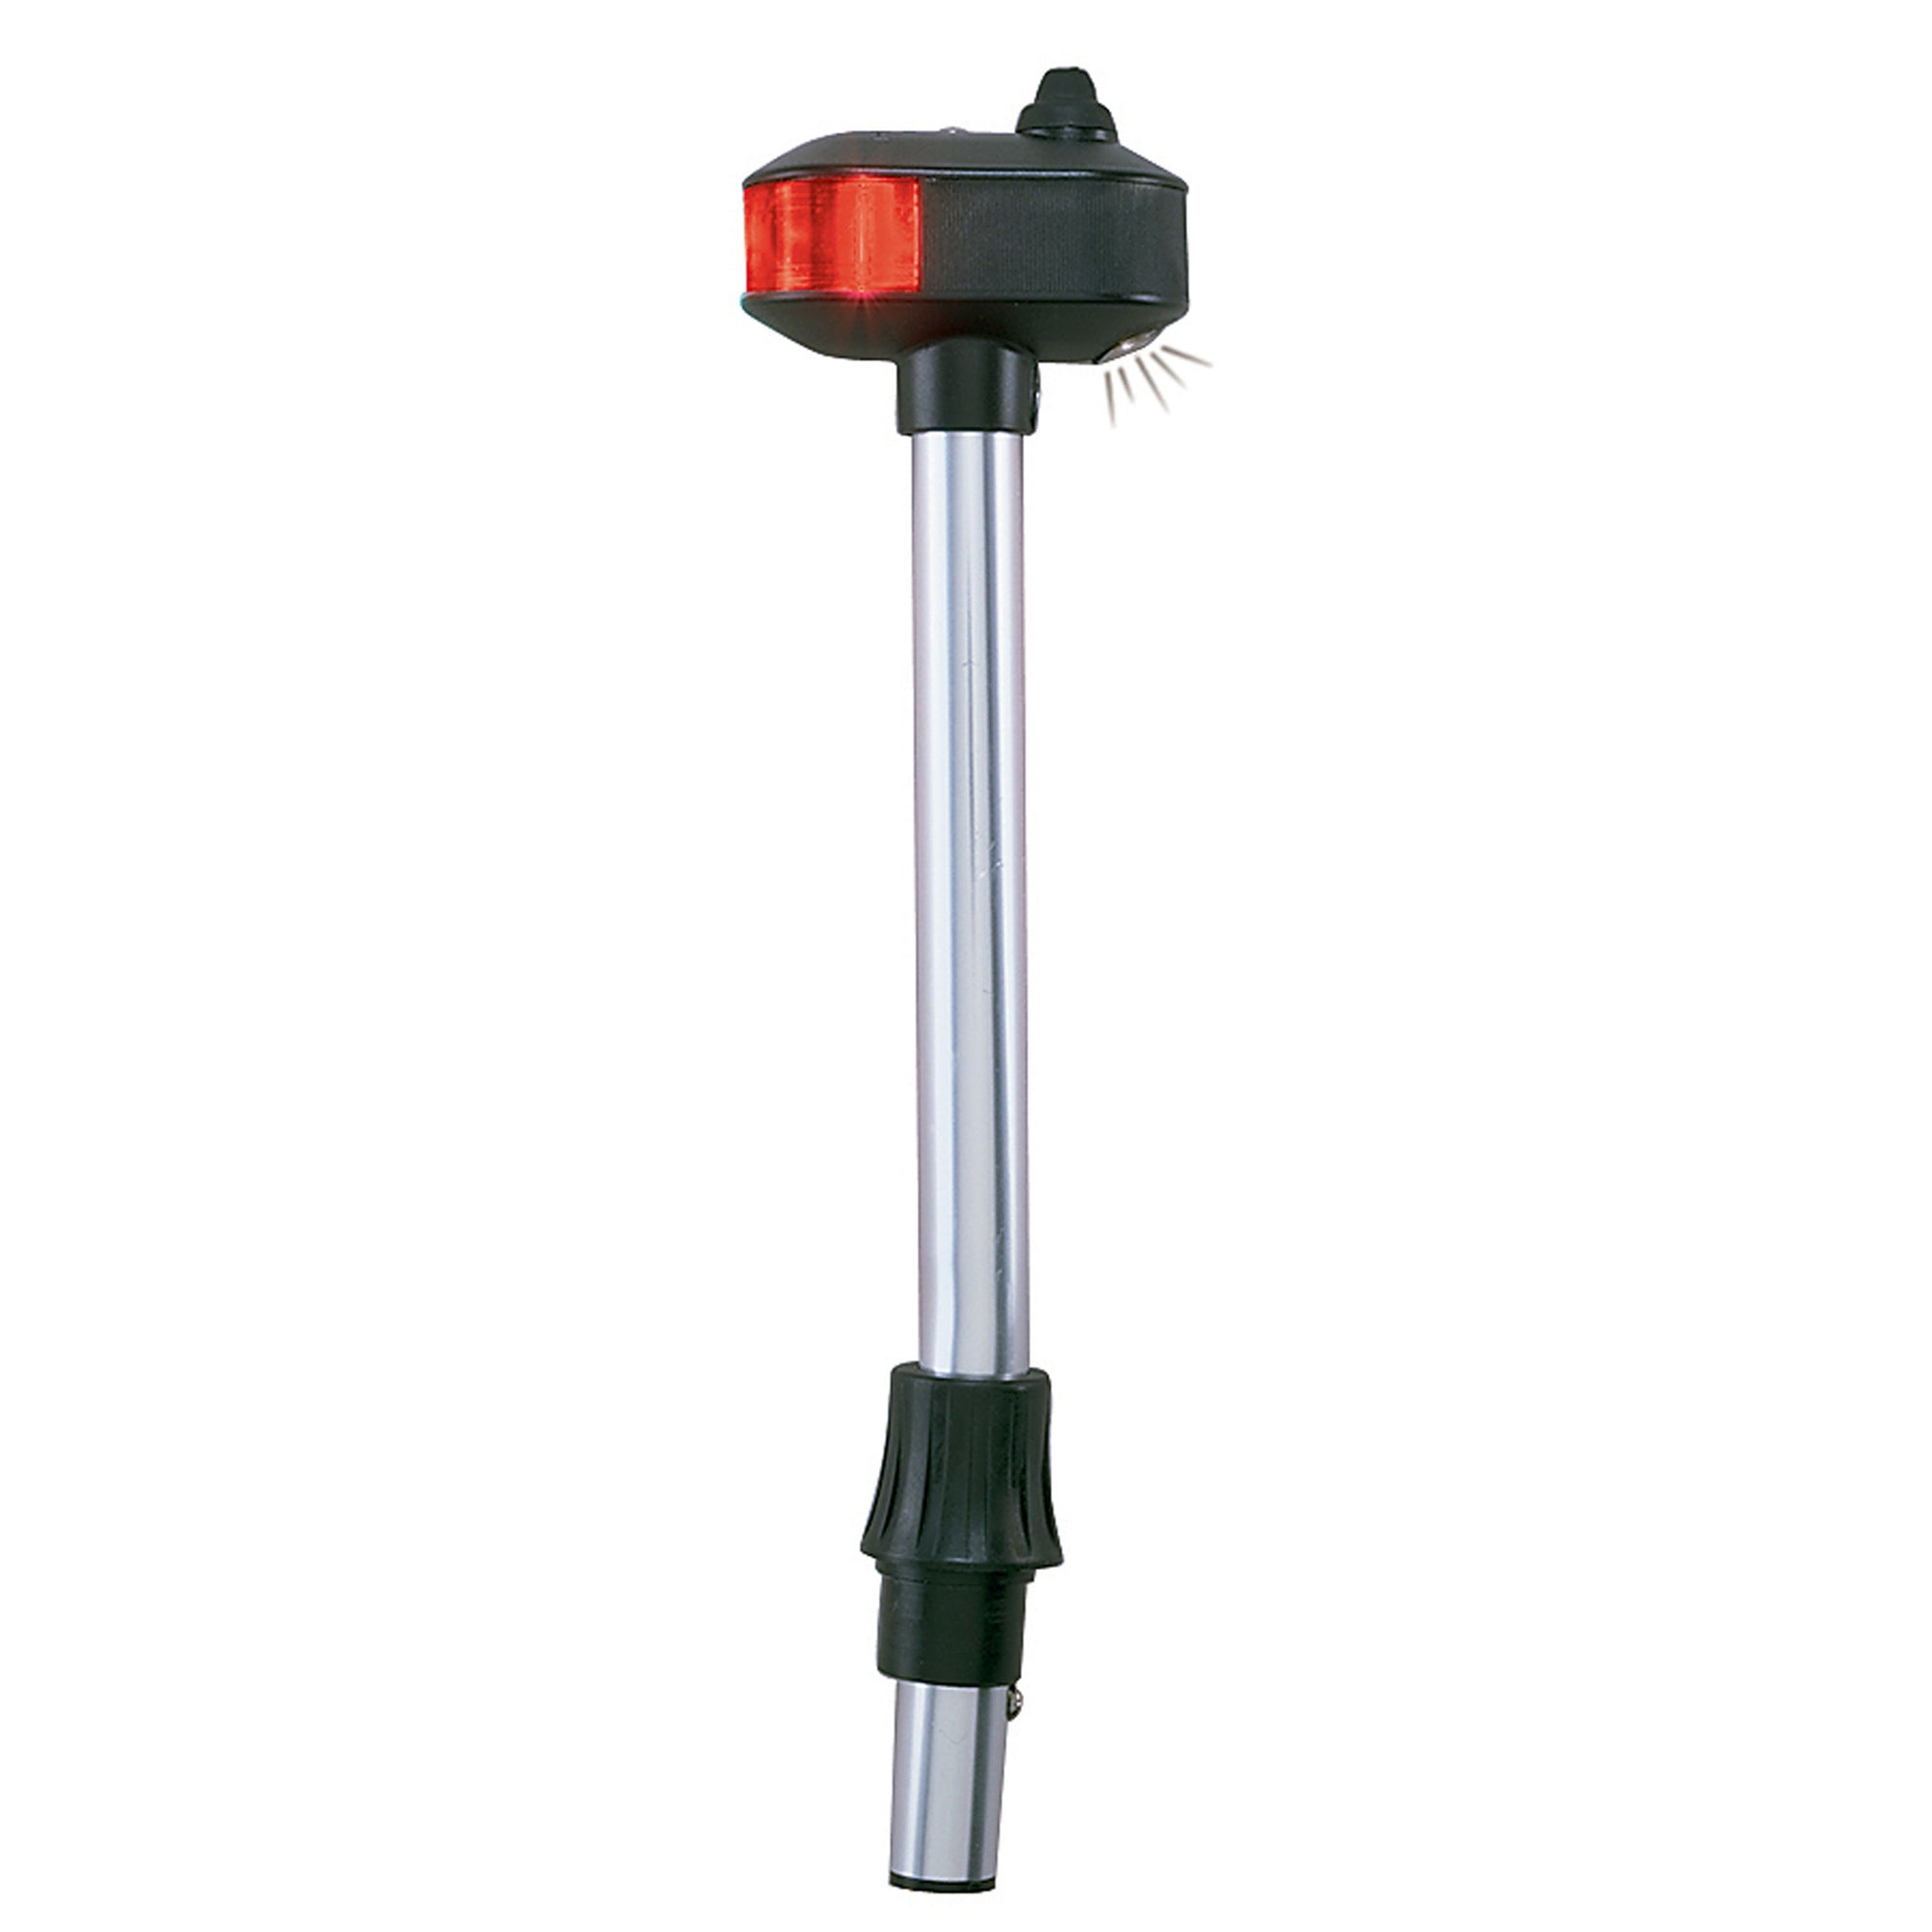 Perko 1422DP2CHR Removable Bi-Color Pole and Utility Light - 12" Height, 5° Rake